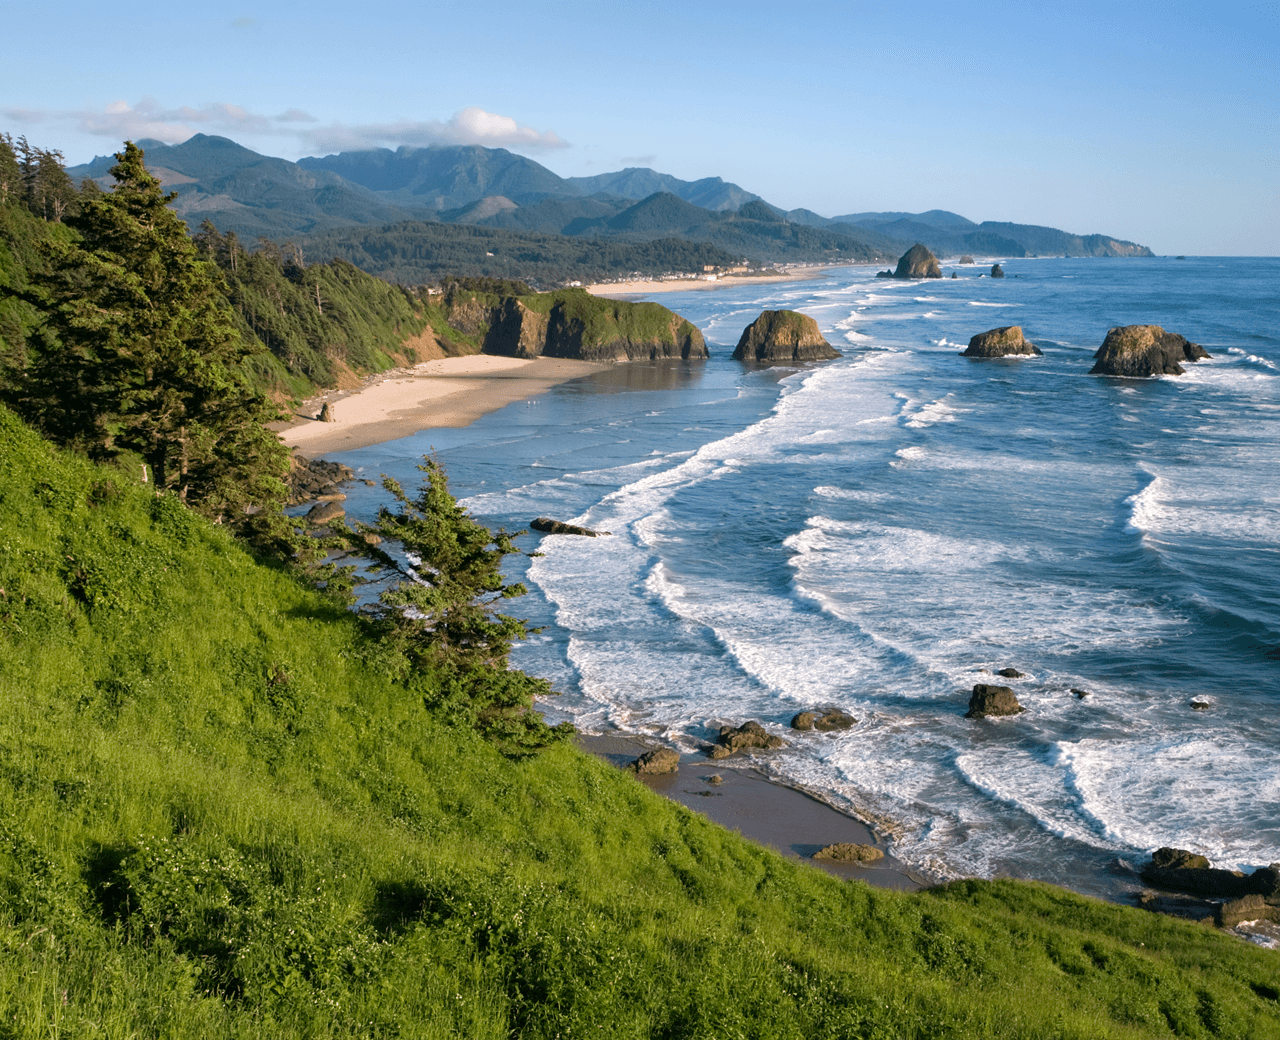 The Astonishingly Wild Coast of Oregon